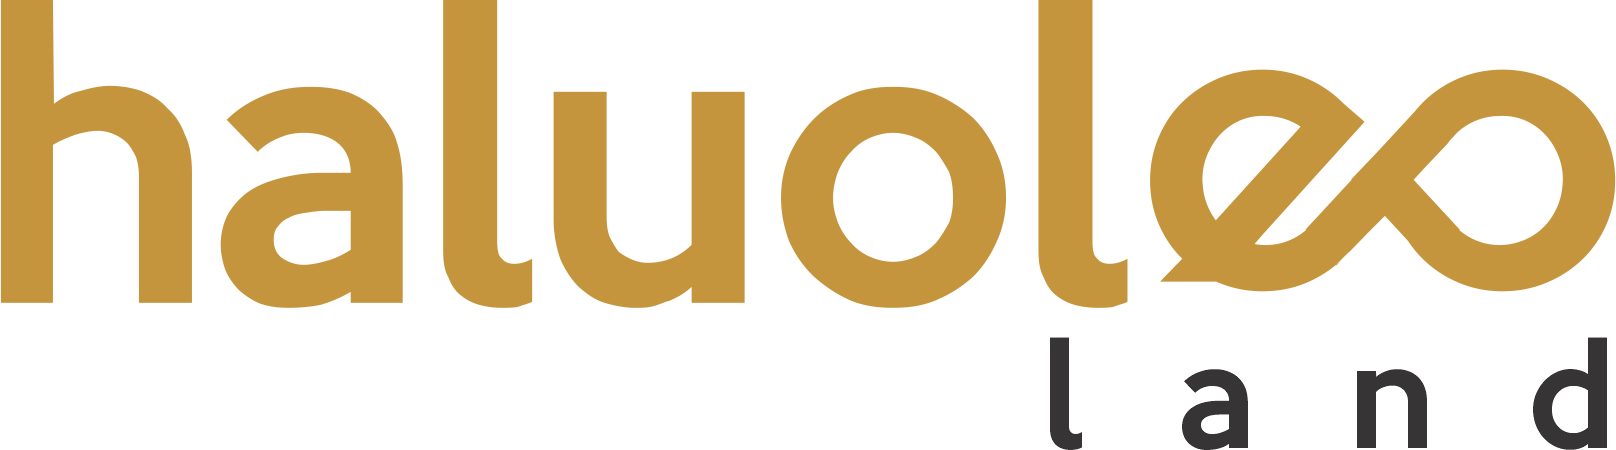 logo colour HALUOLEO